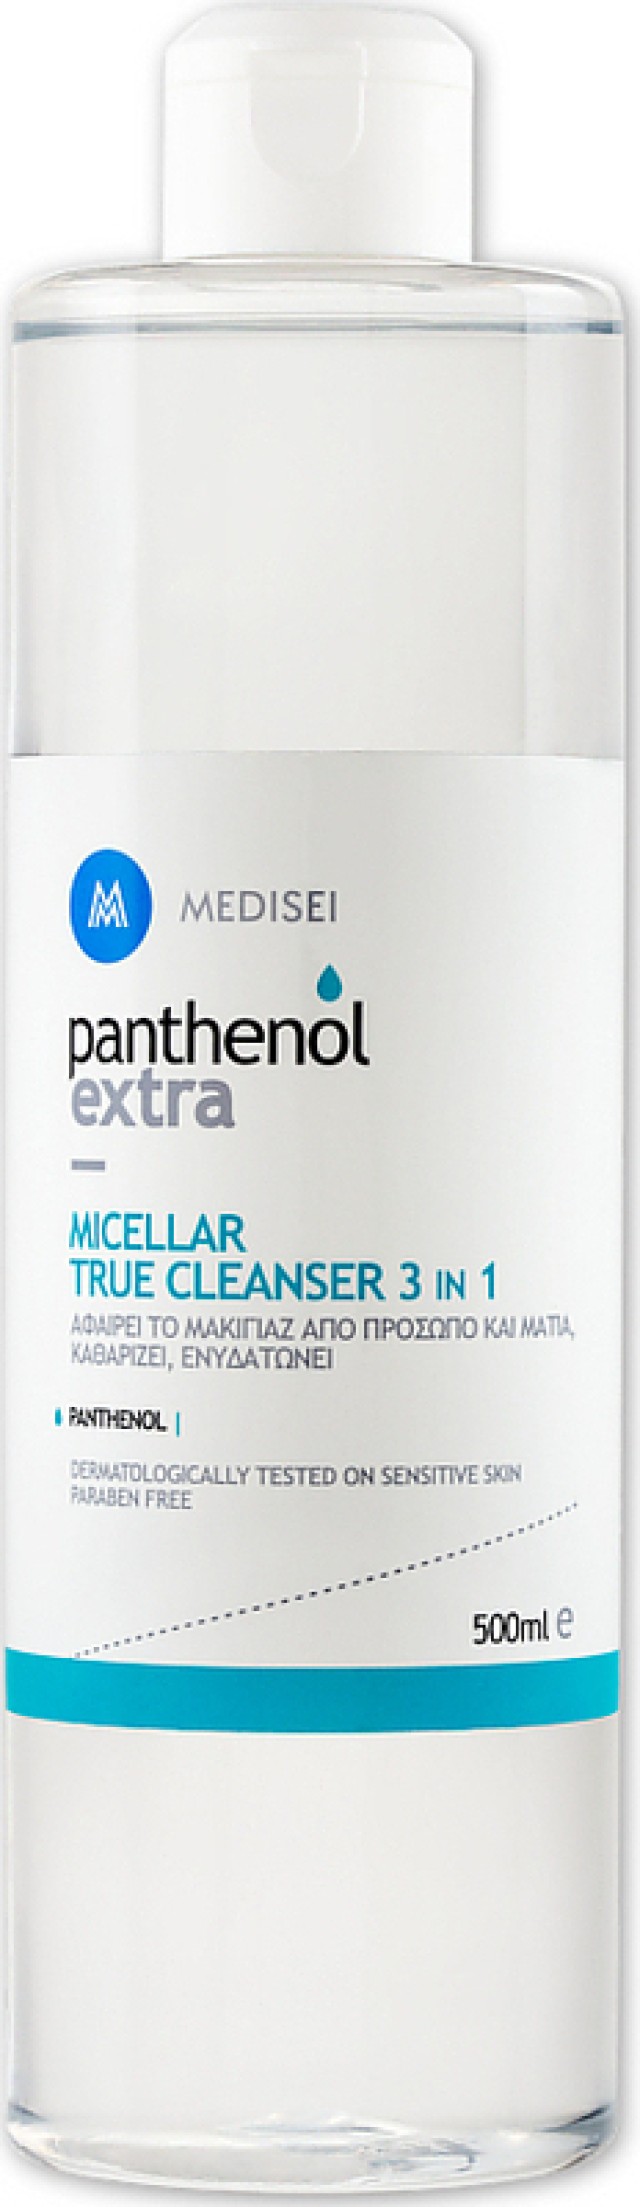 Medisei Panthenol Extra Micellar True Cleanser 3 in 1 Cucumber Fruit Extract Λοσιόν Καθαρισμού Προσώπου - Ματιών 500ml